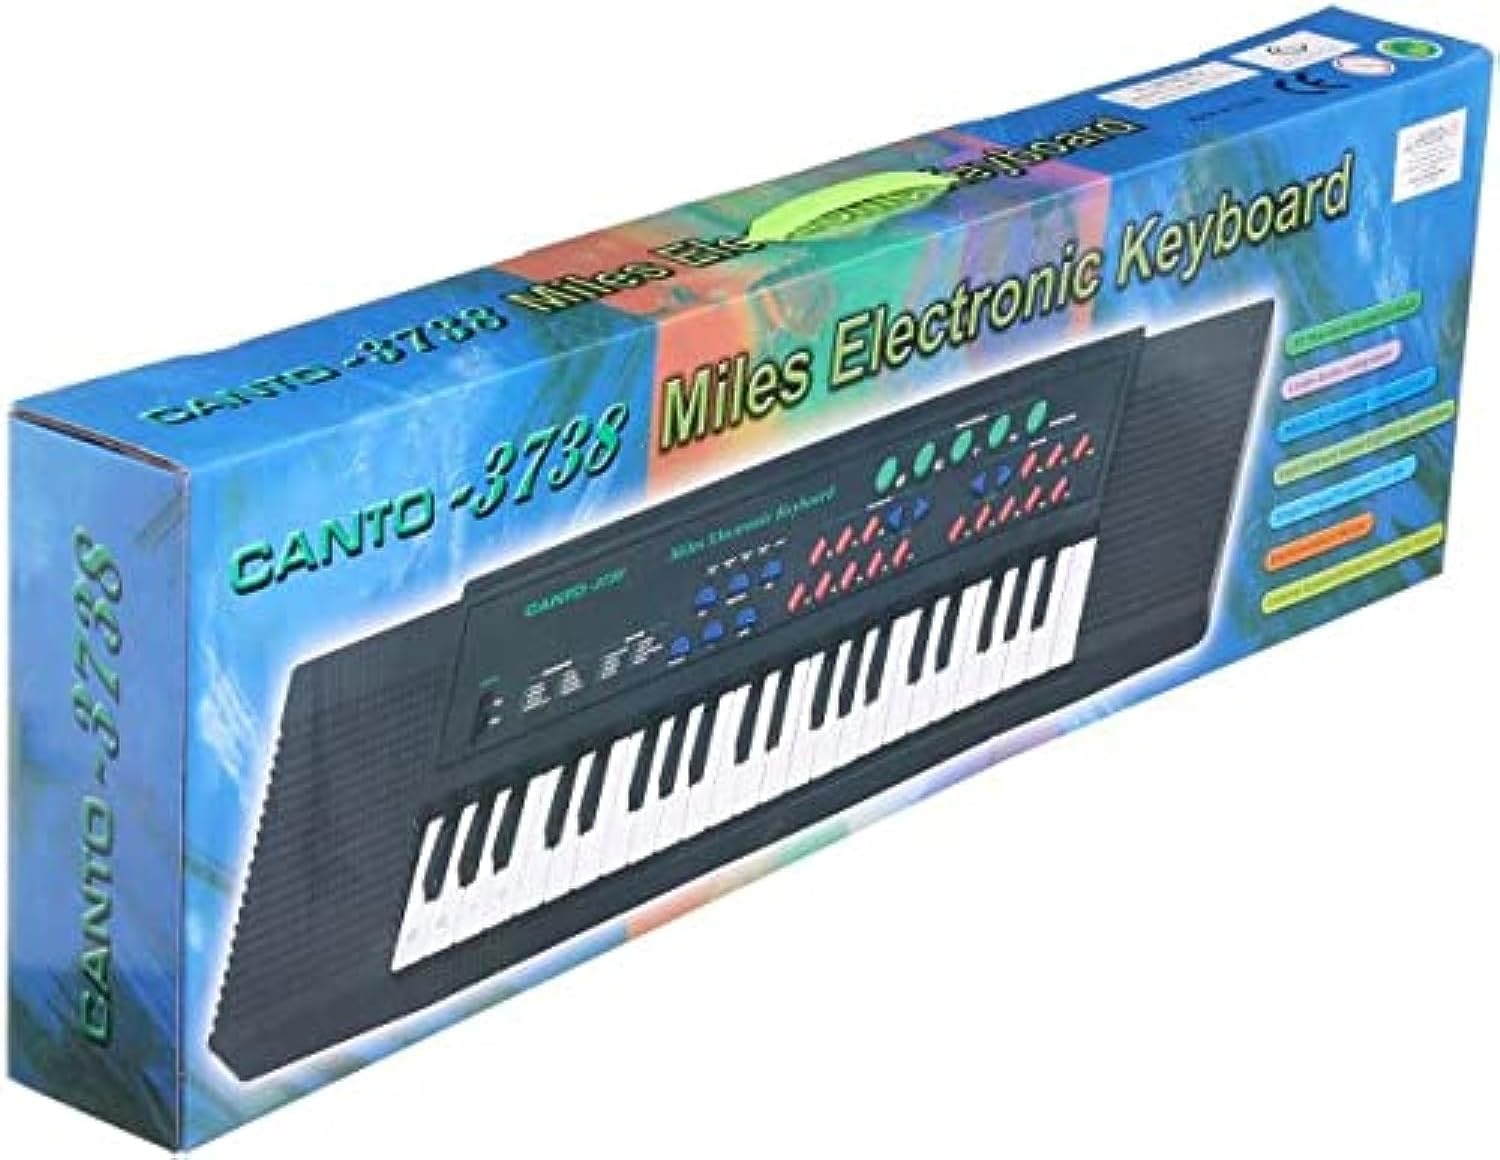 Miles Electronic Keyboard - 37 Keys